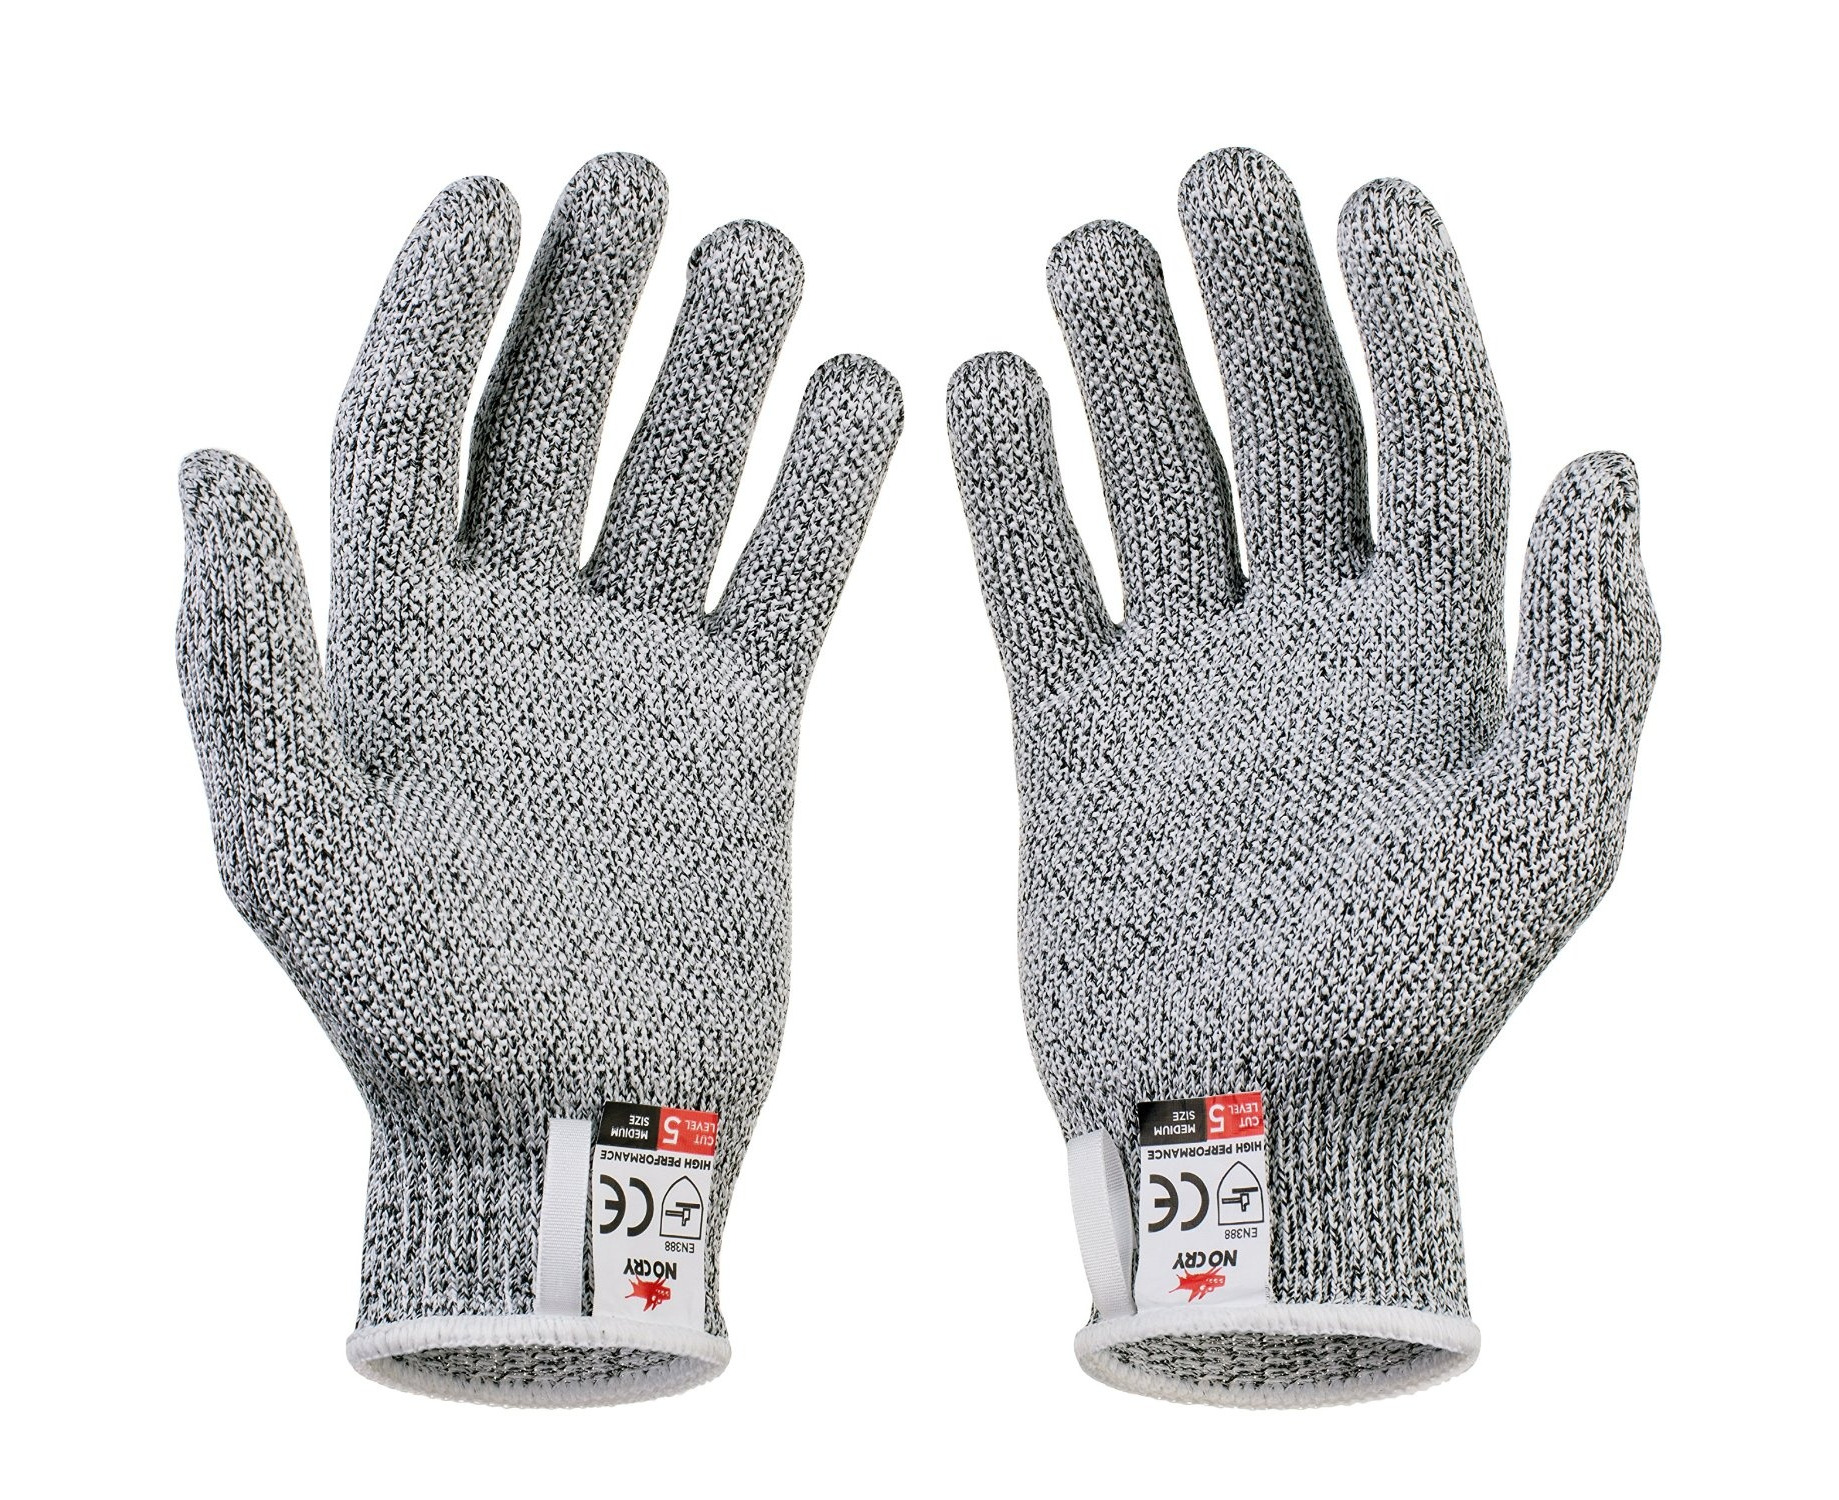 Medium, Original Grip Dot) - NoCry Cut Resistant Gloves with